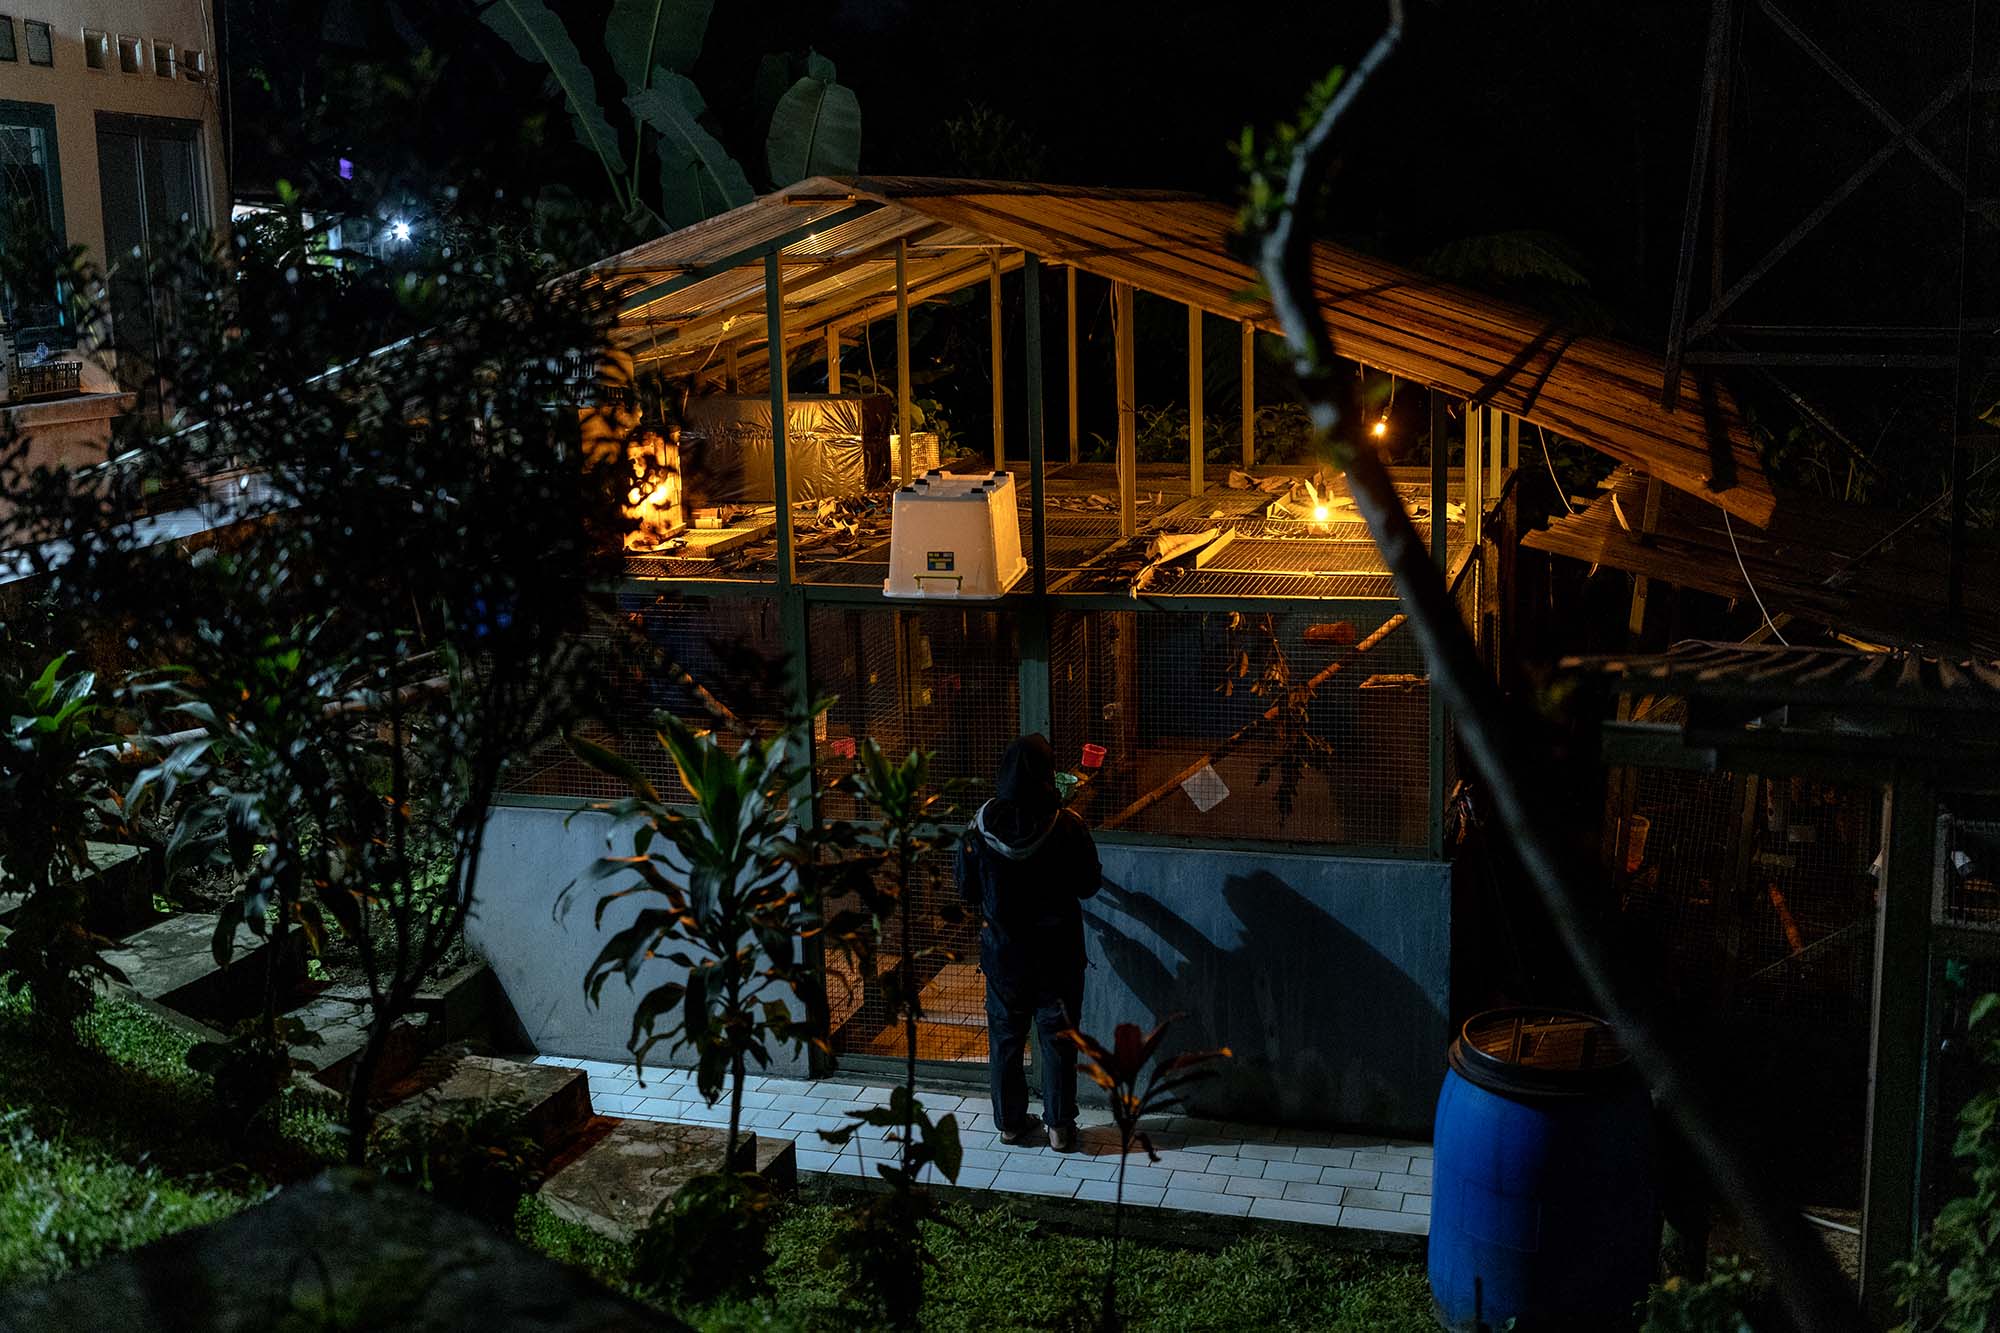 Returning the endangered slow loris to its wild Javan home